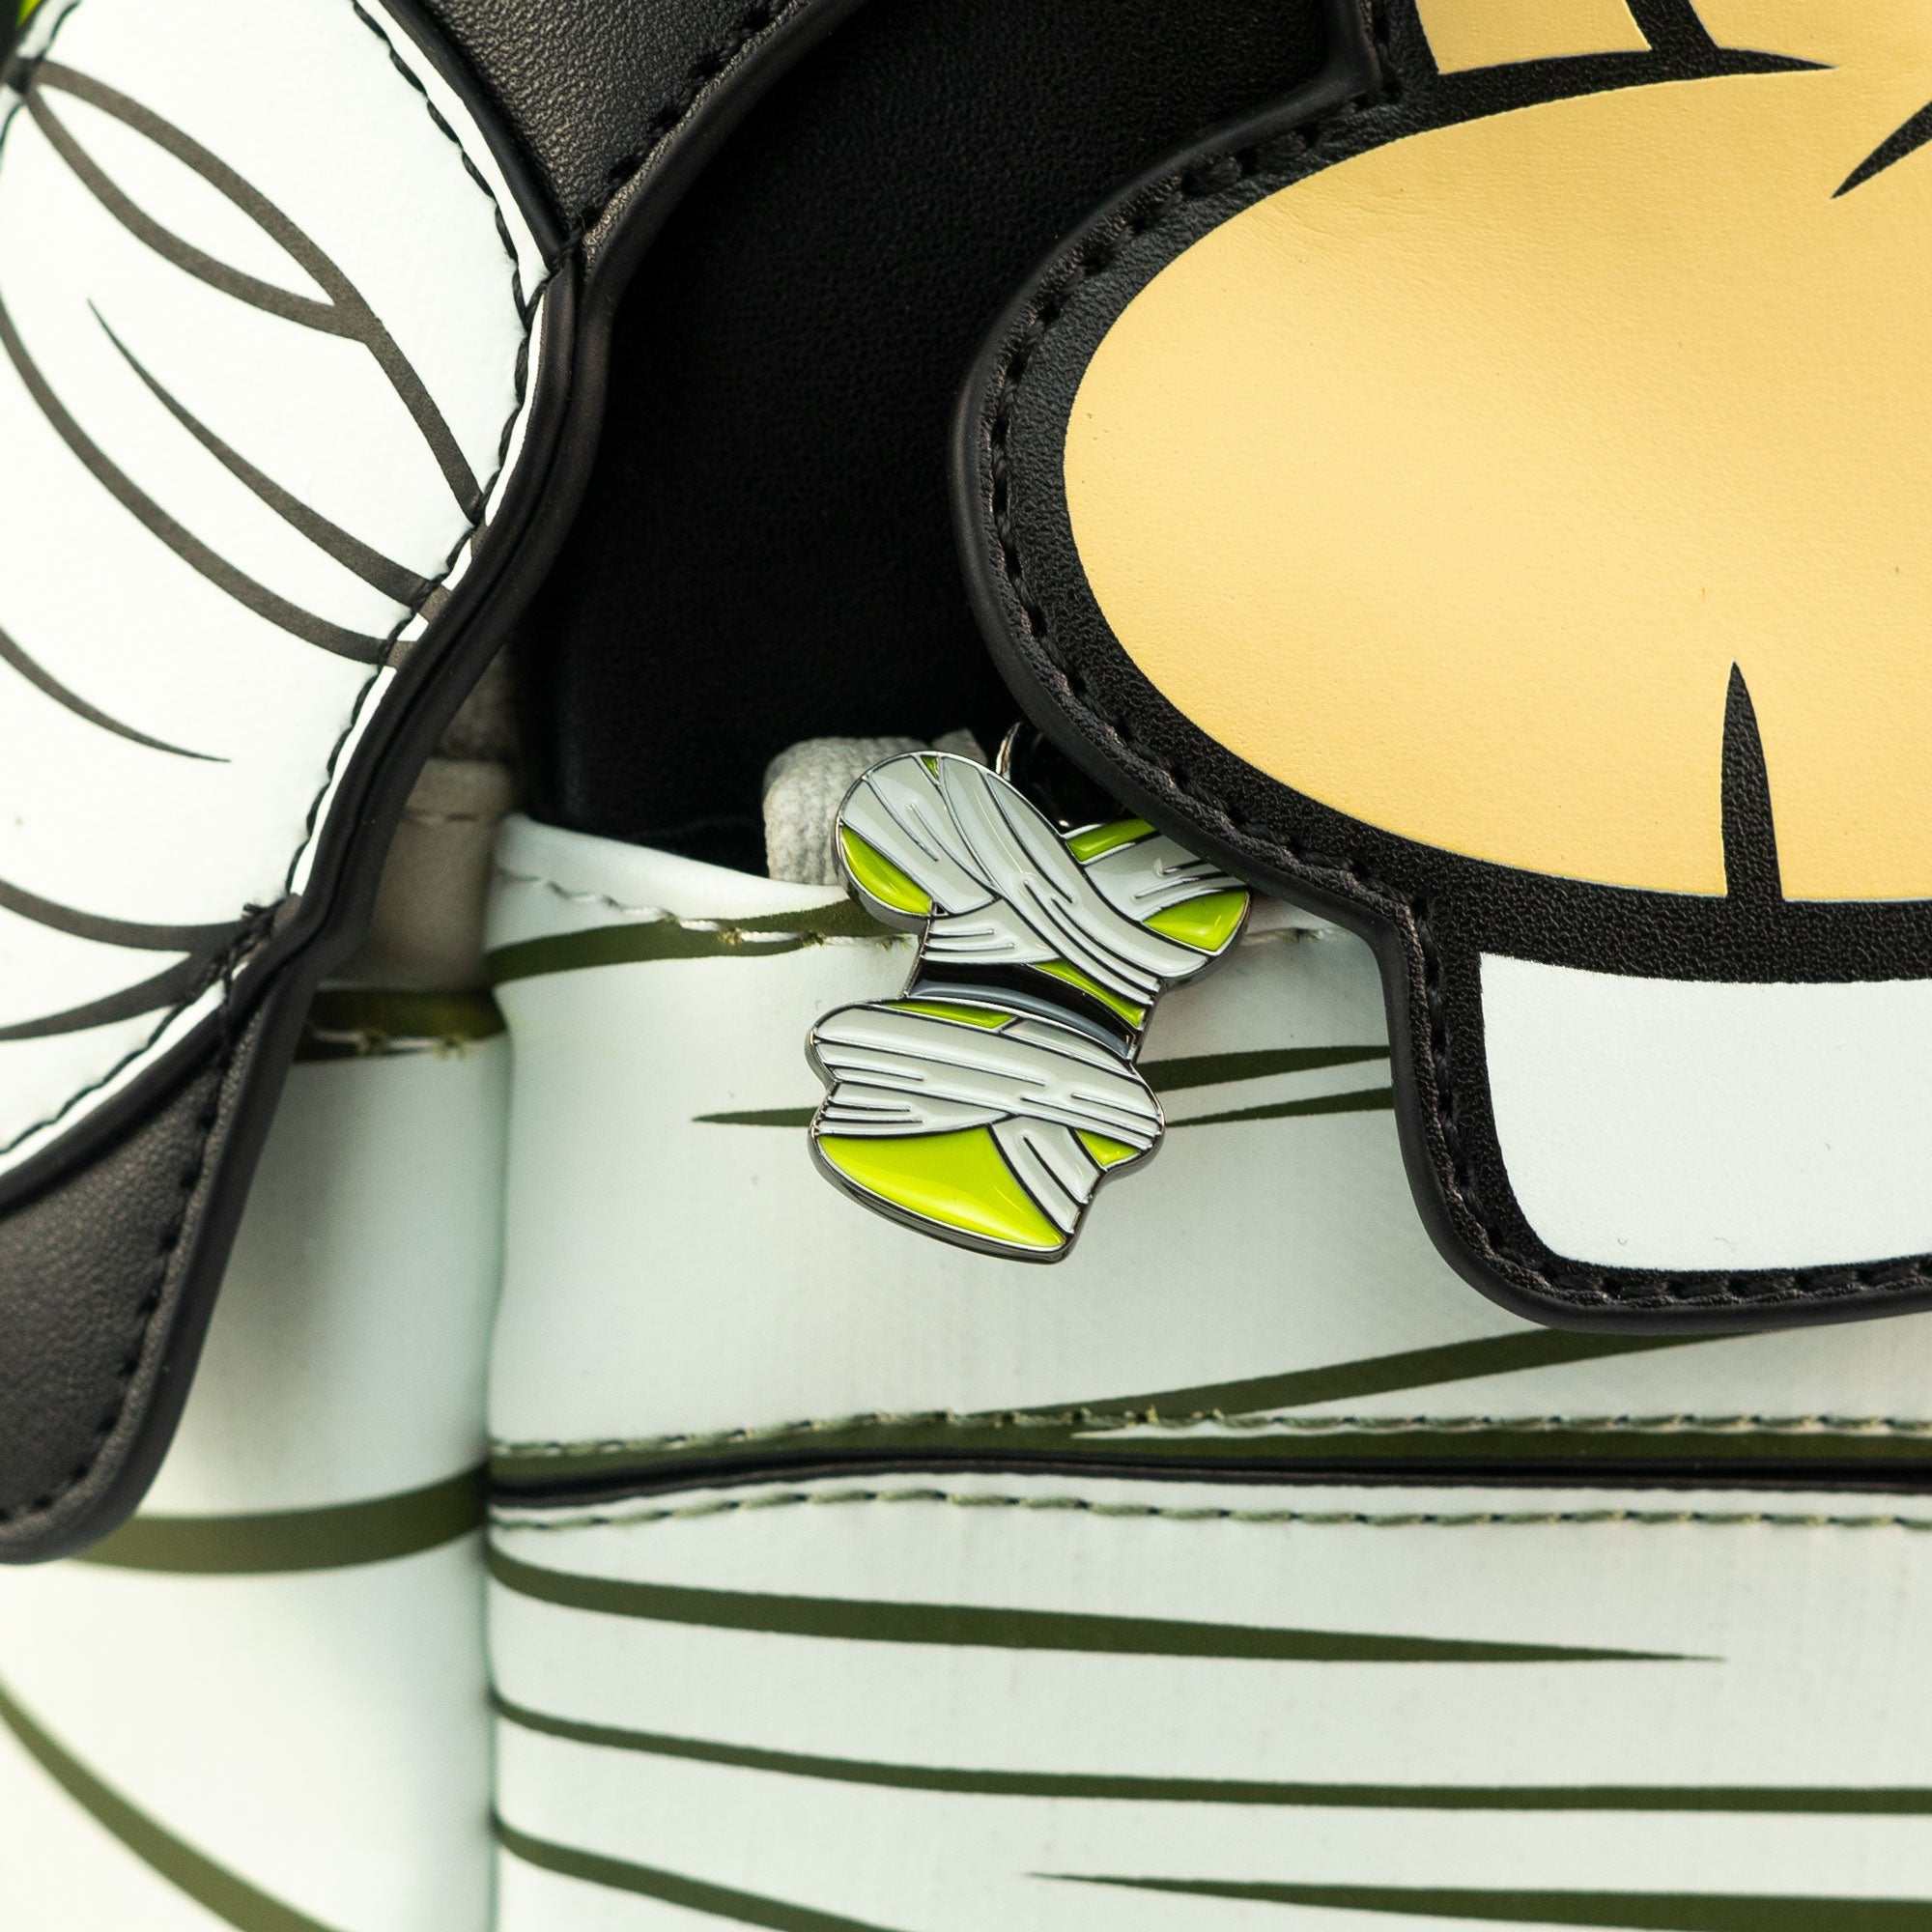 Loungefly x Disney Goofy Glow in the Dark Mummy Cosplay Mini Backpack - GeekCore